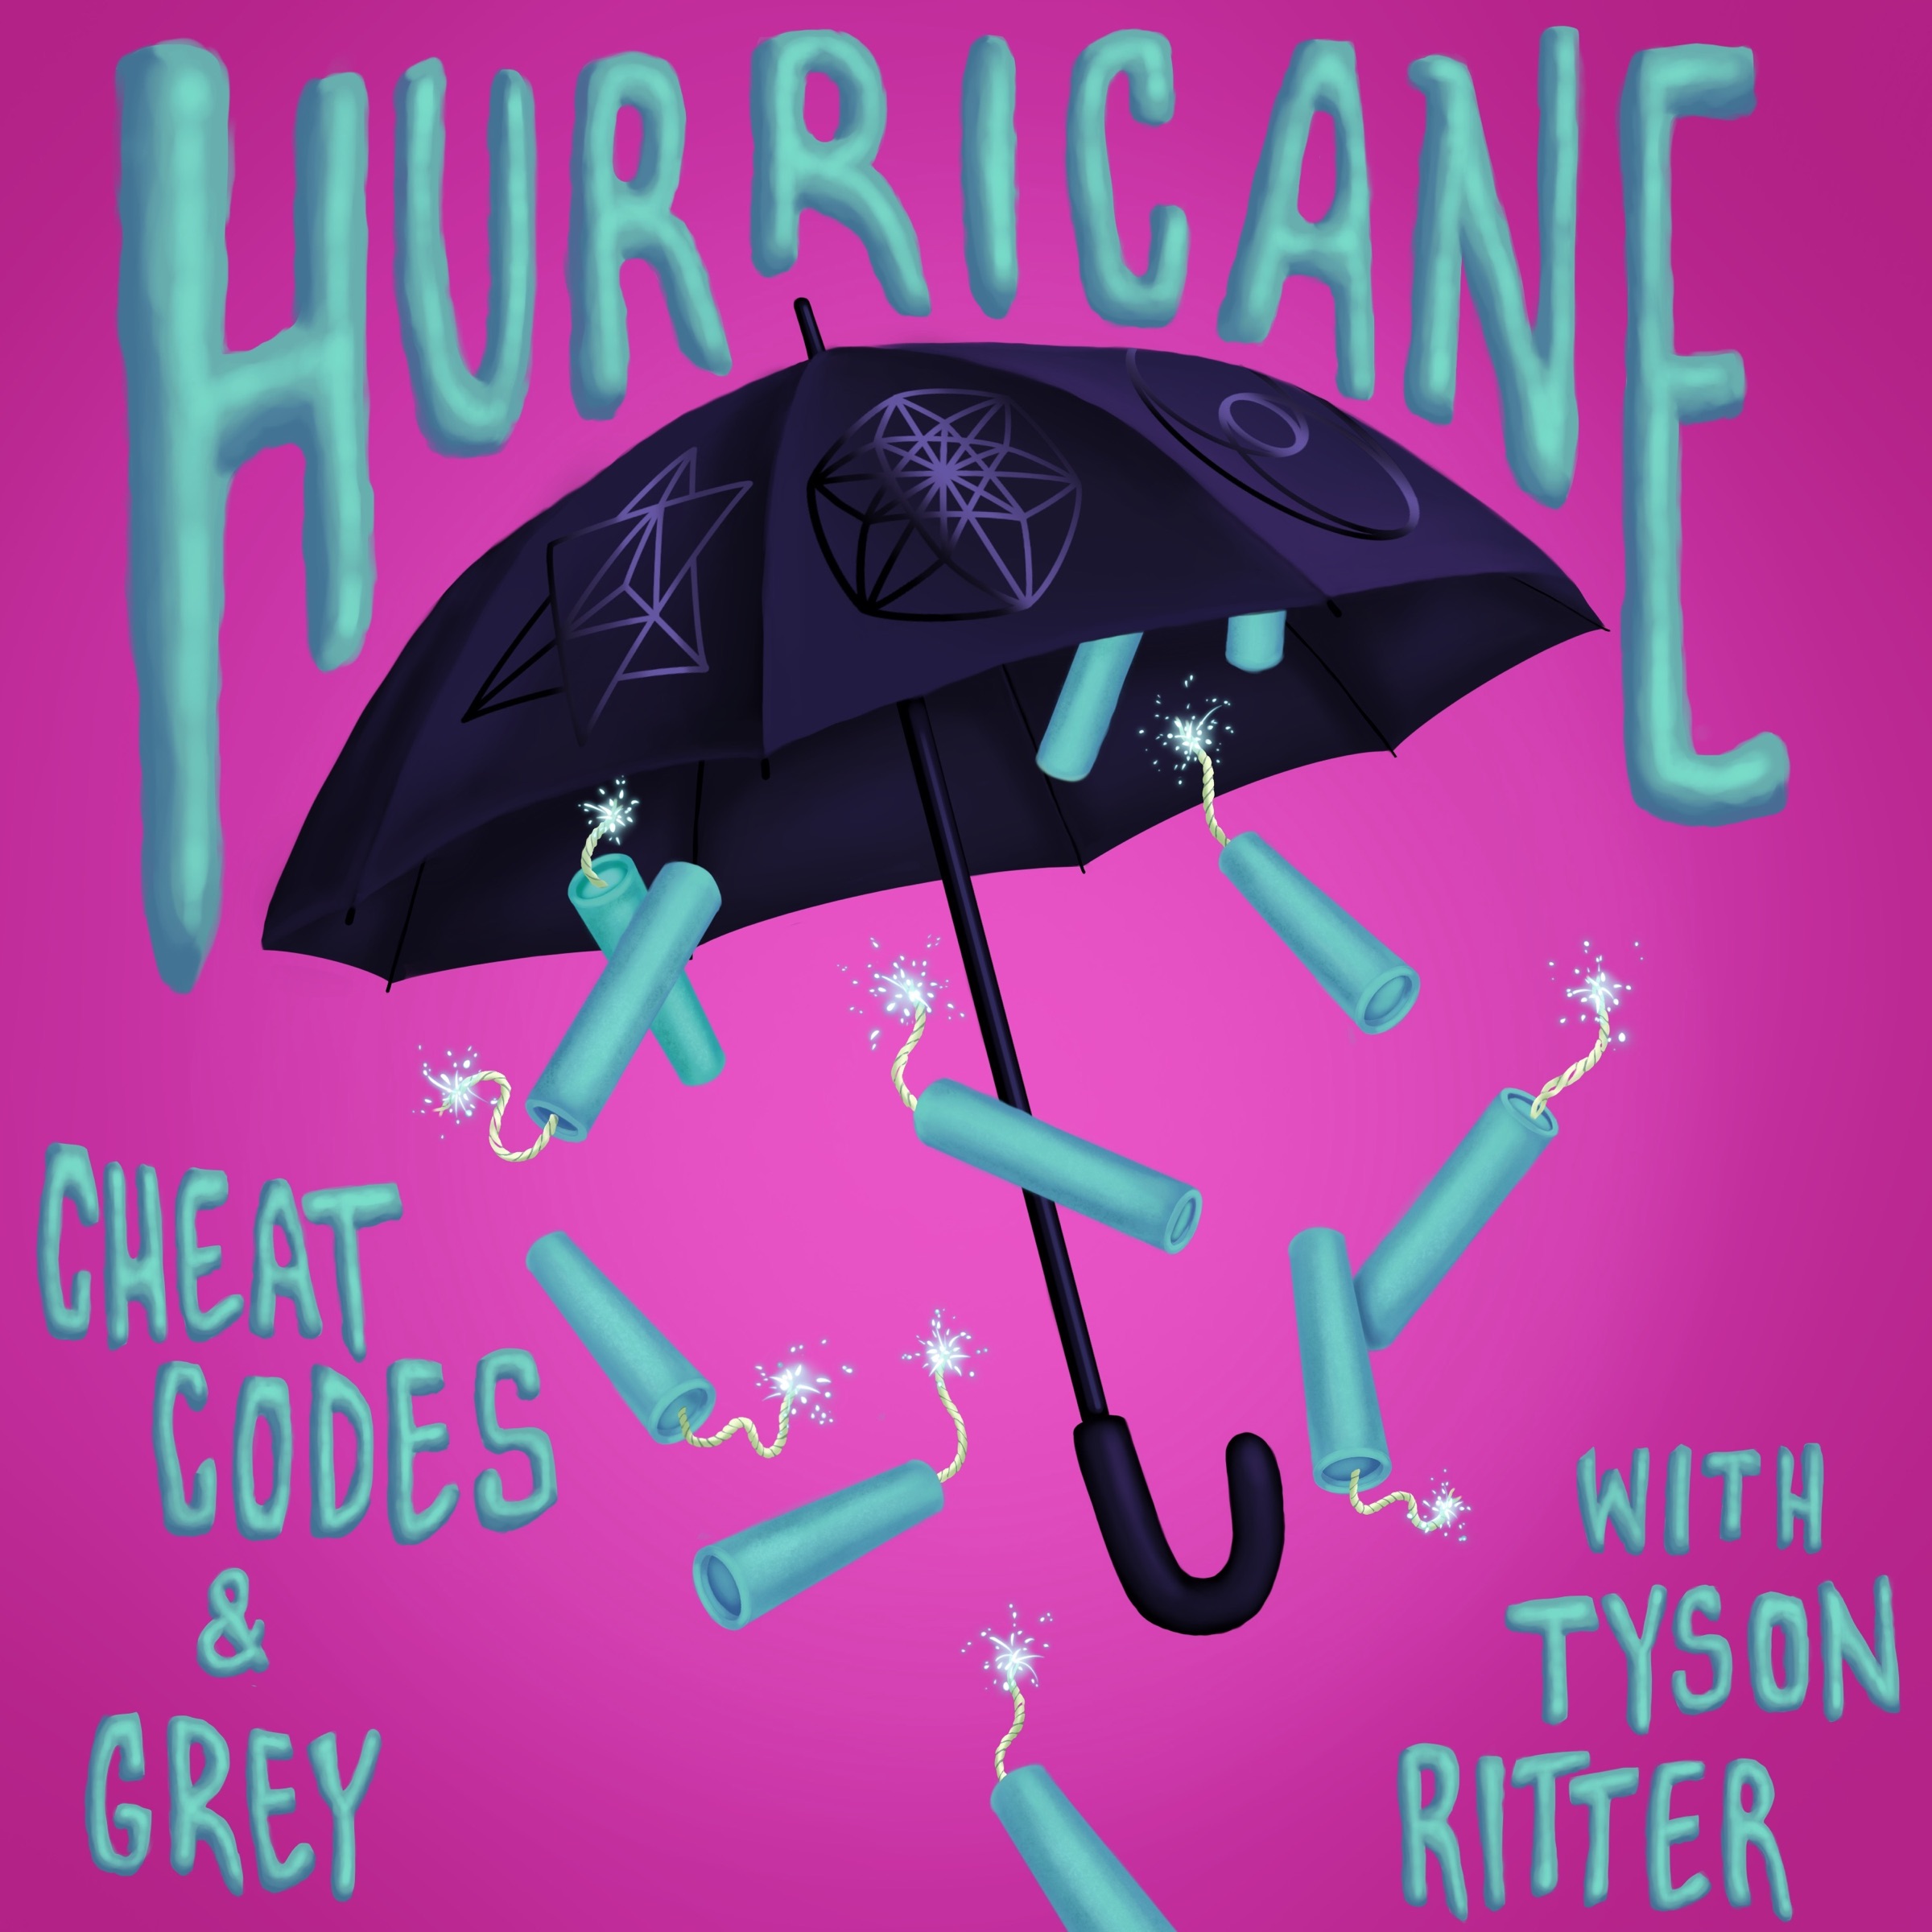 Cheat Codes, Grey, & Tyson Ritter Hurricane cover artwork